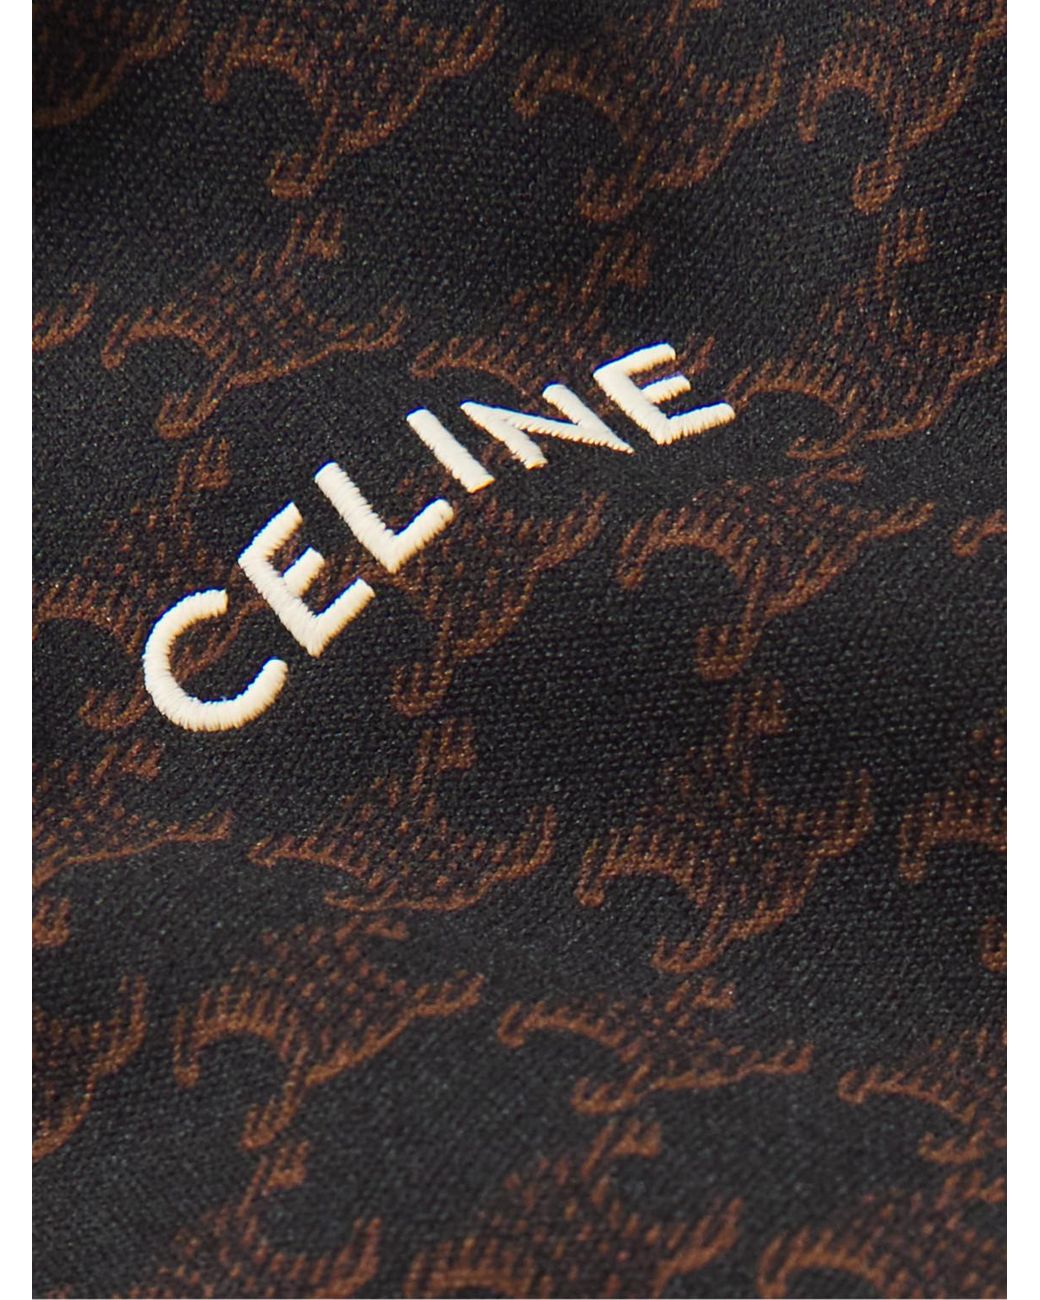 Celine Homme Triomphe logo-print Tech-Jersey Track Jacket - Men - Black Sweats - M